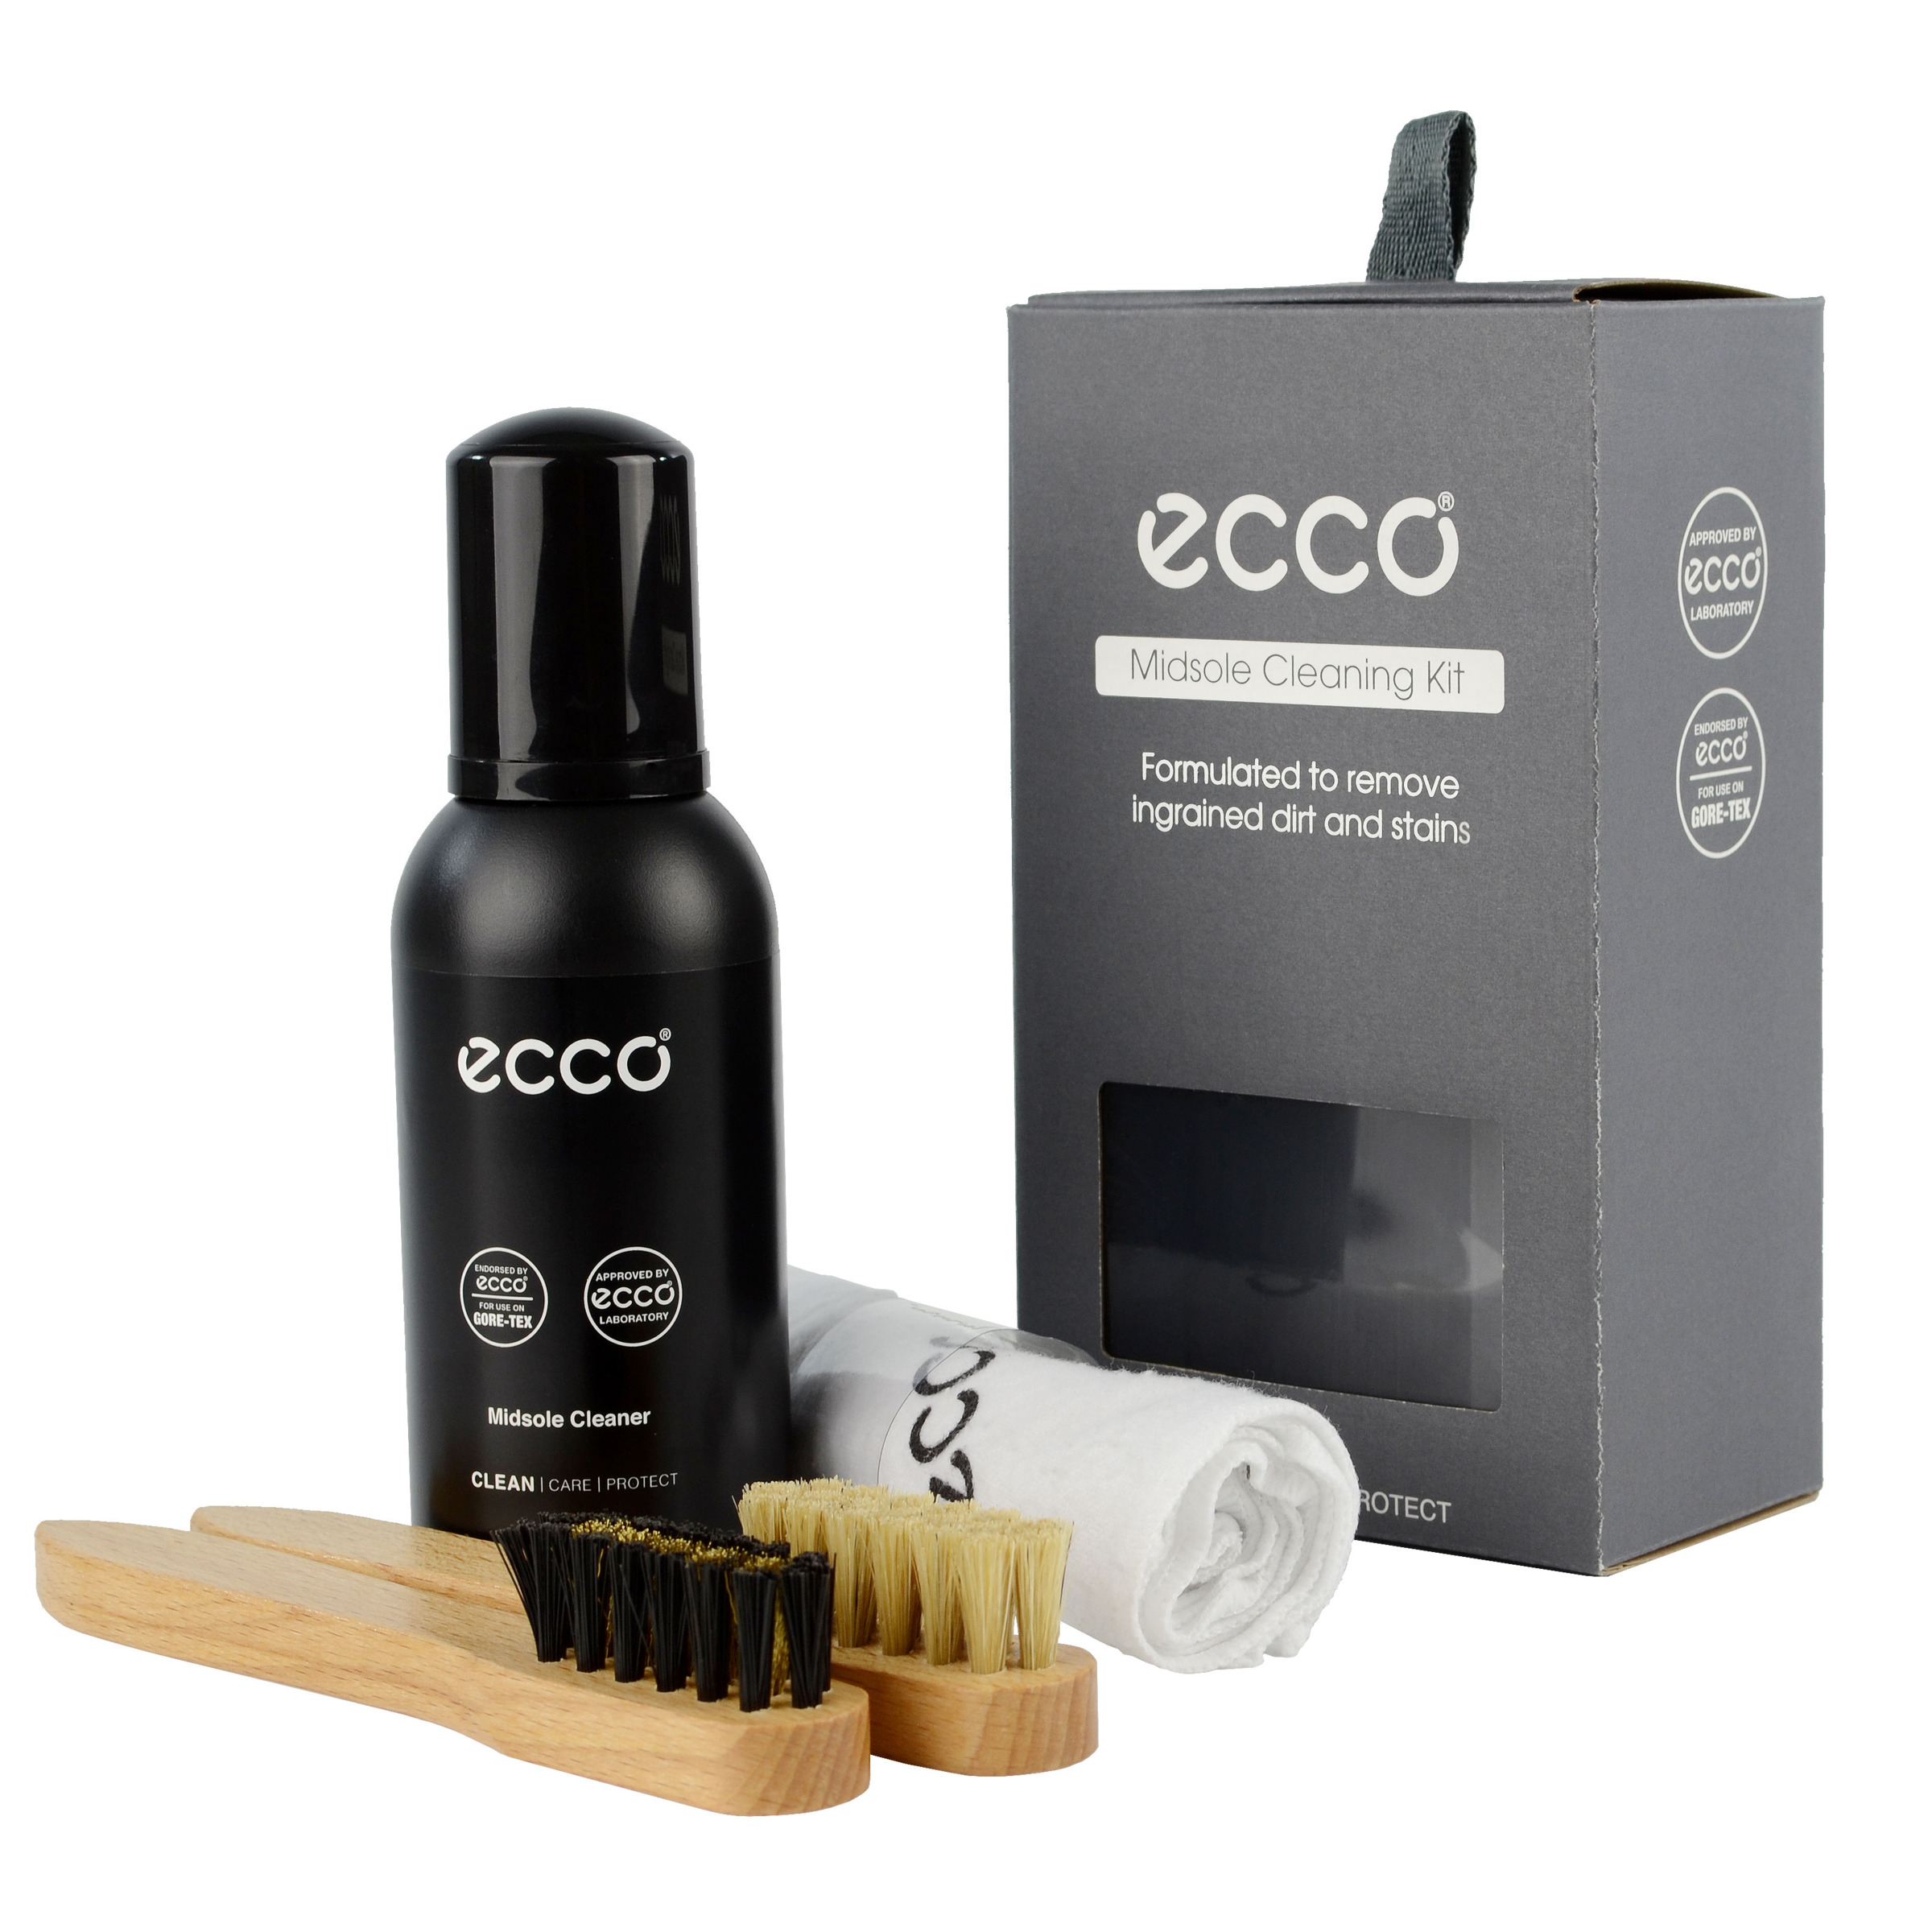 ECCO Midsole Cleaning Kit - ECCO.com